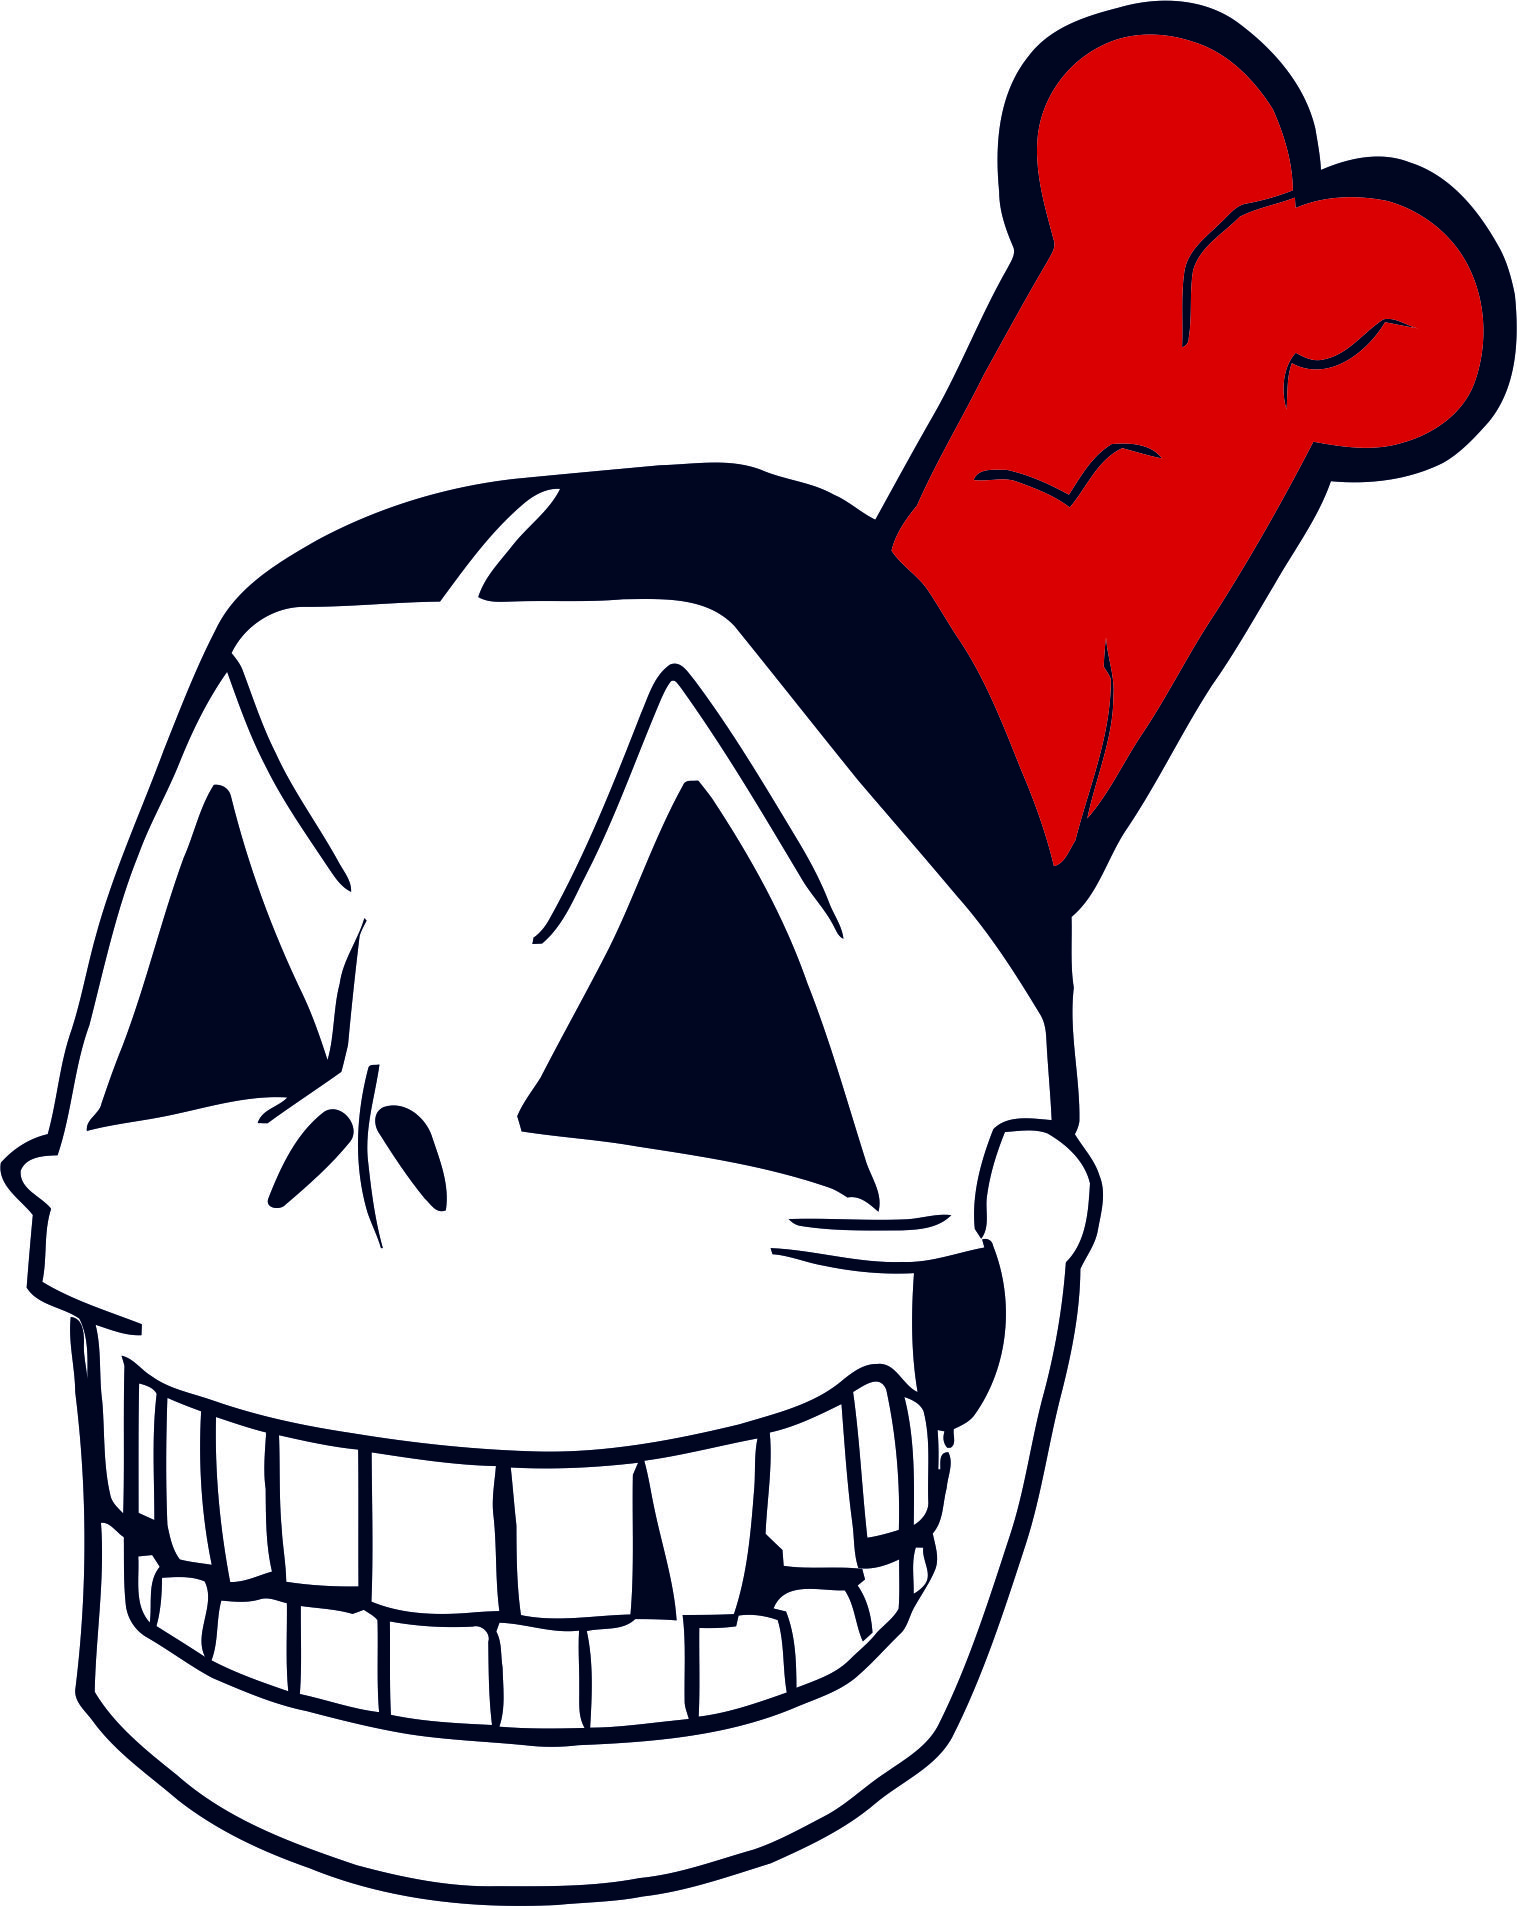 Cleveland Indians Skulls Logo fabric transfer